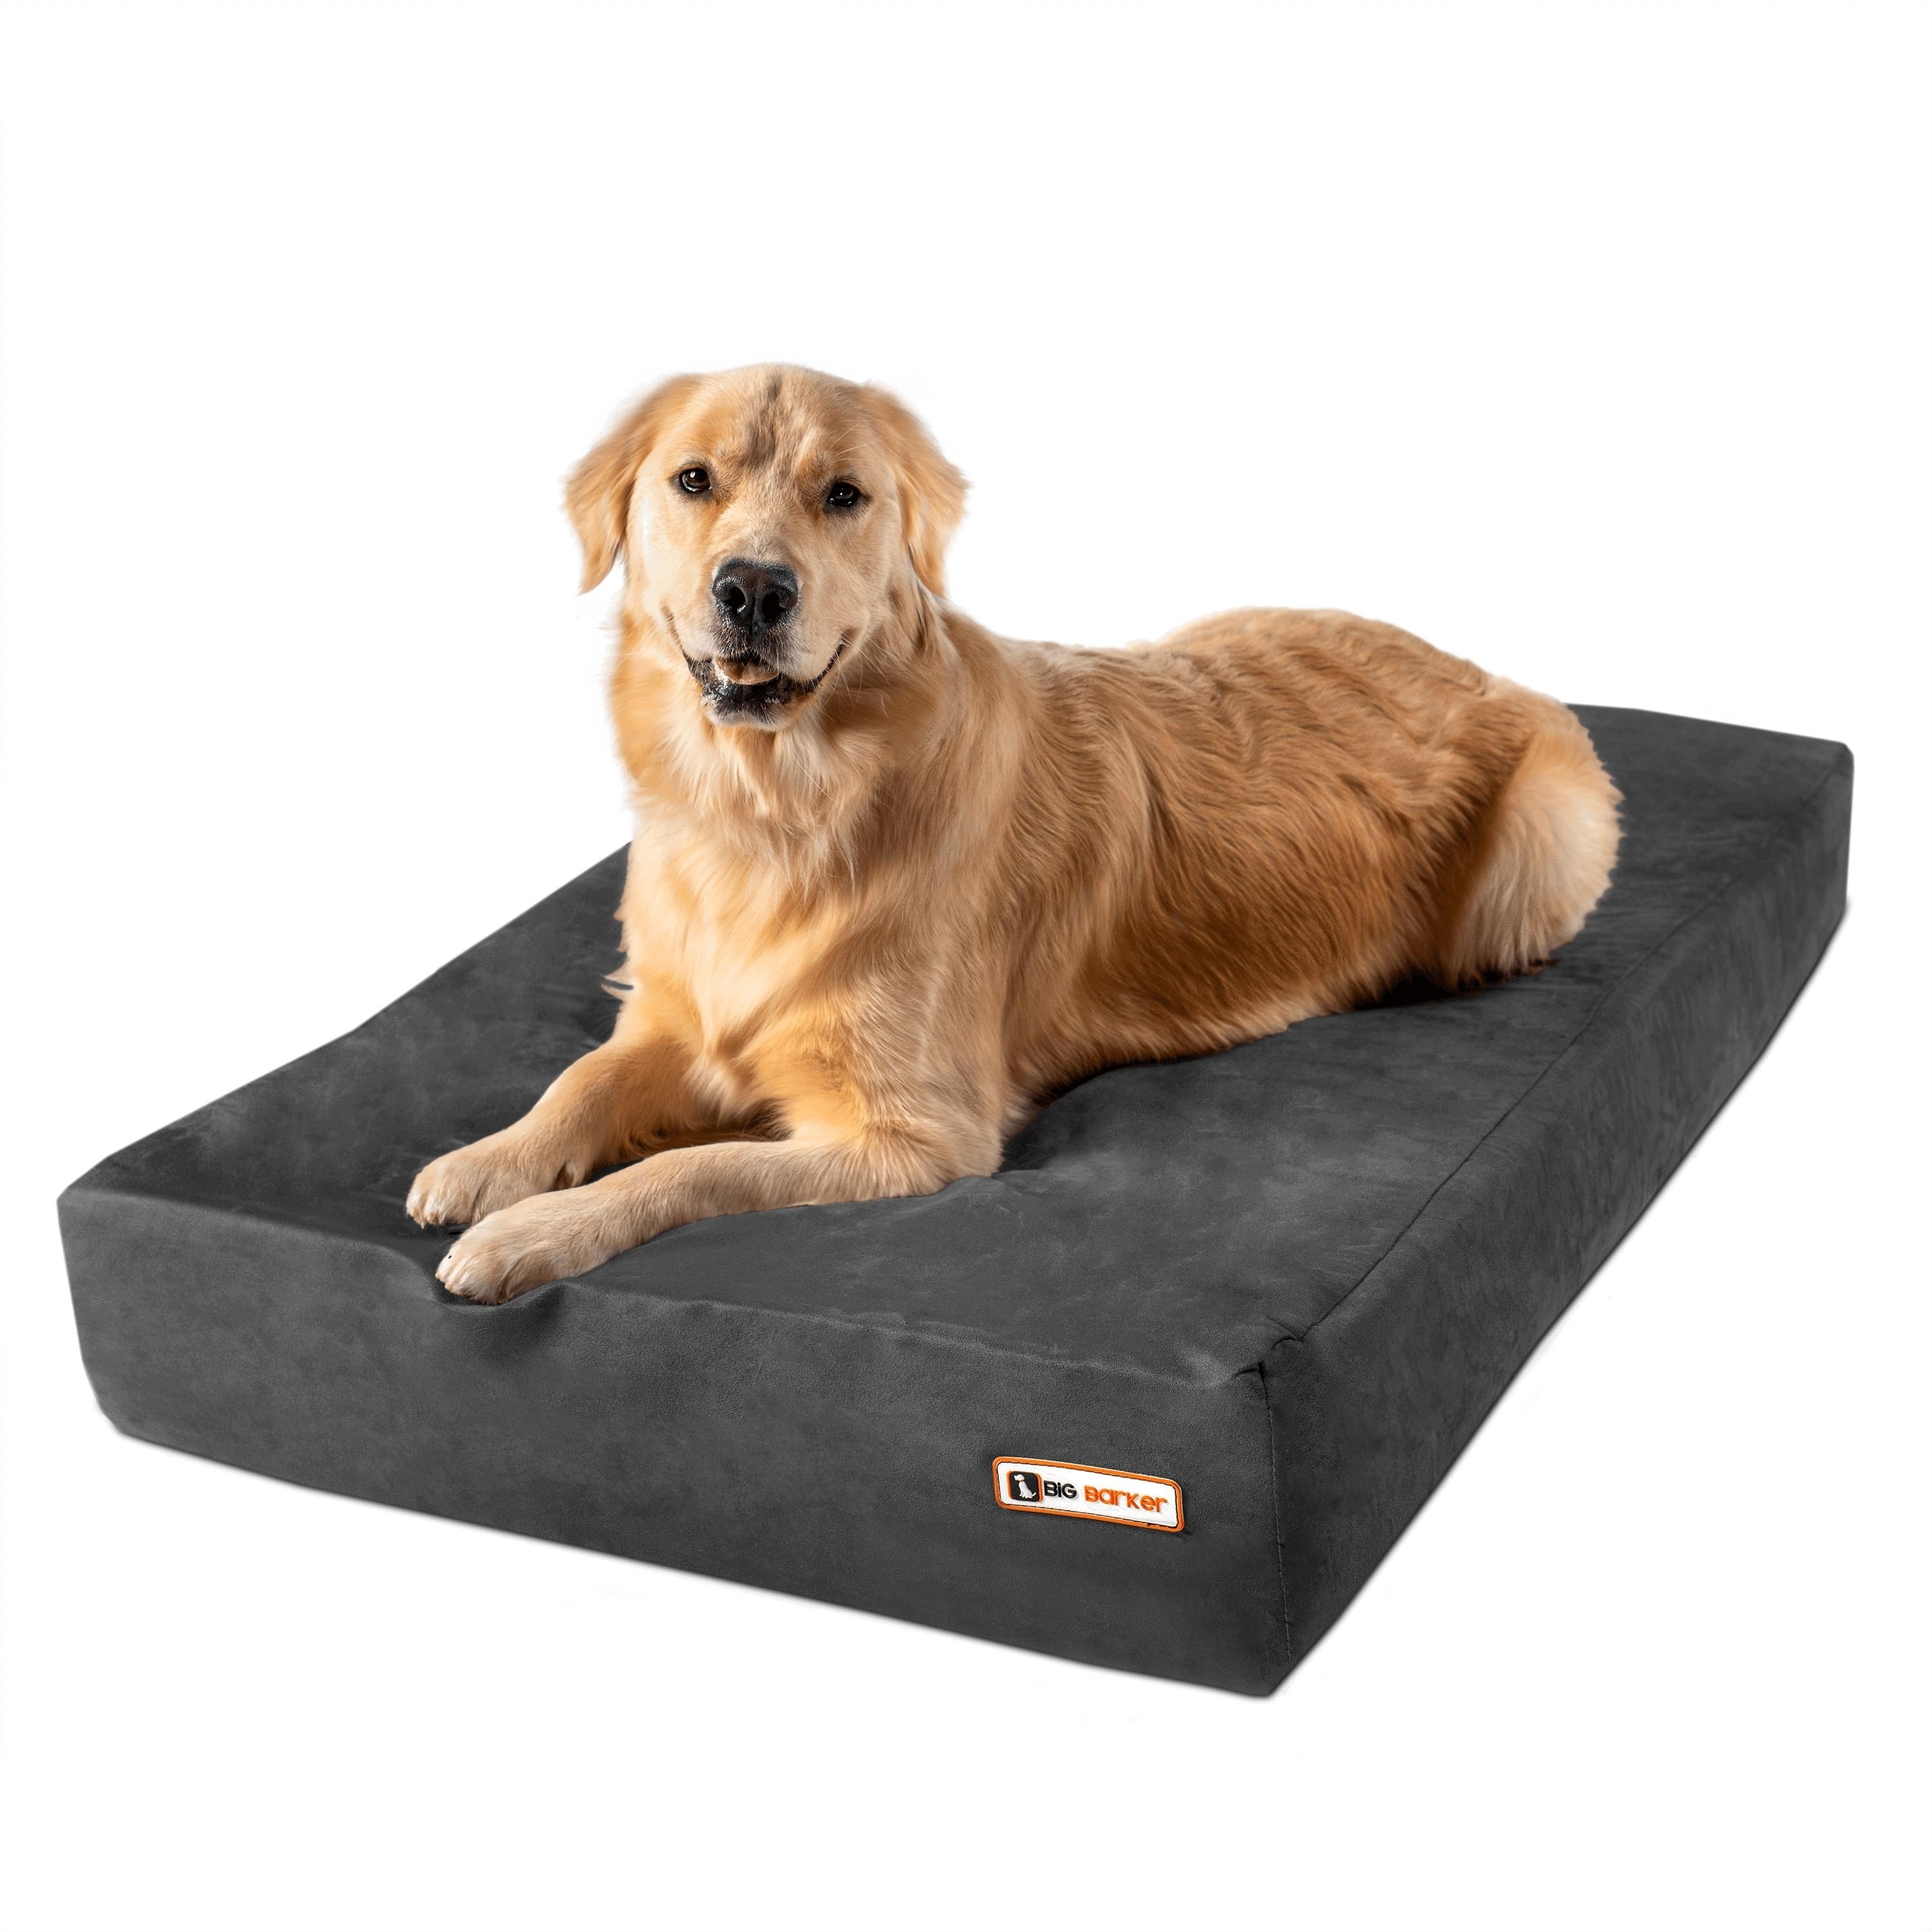 menards orthopedic dog beds on sale